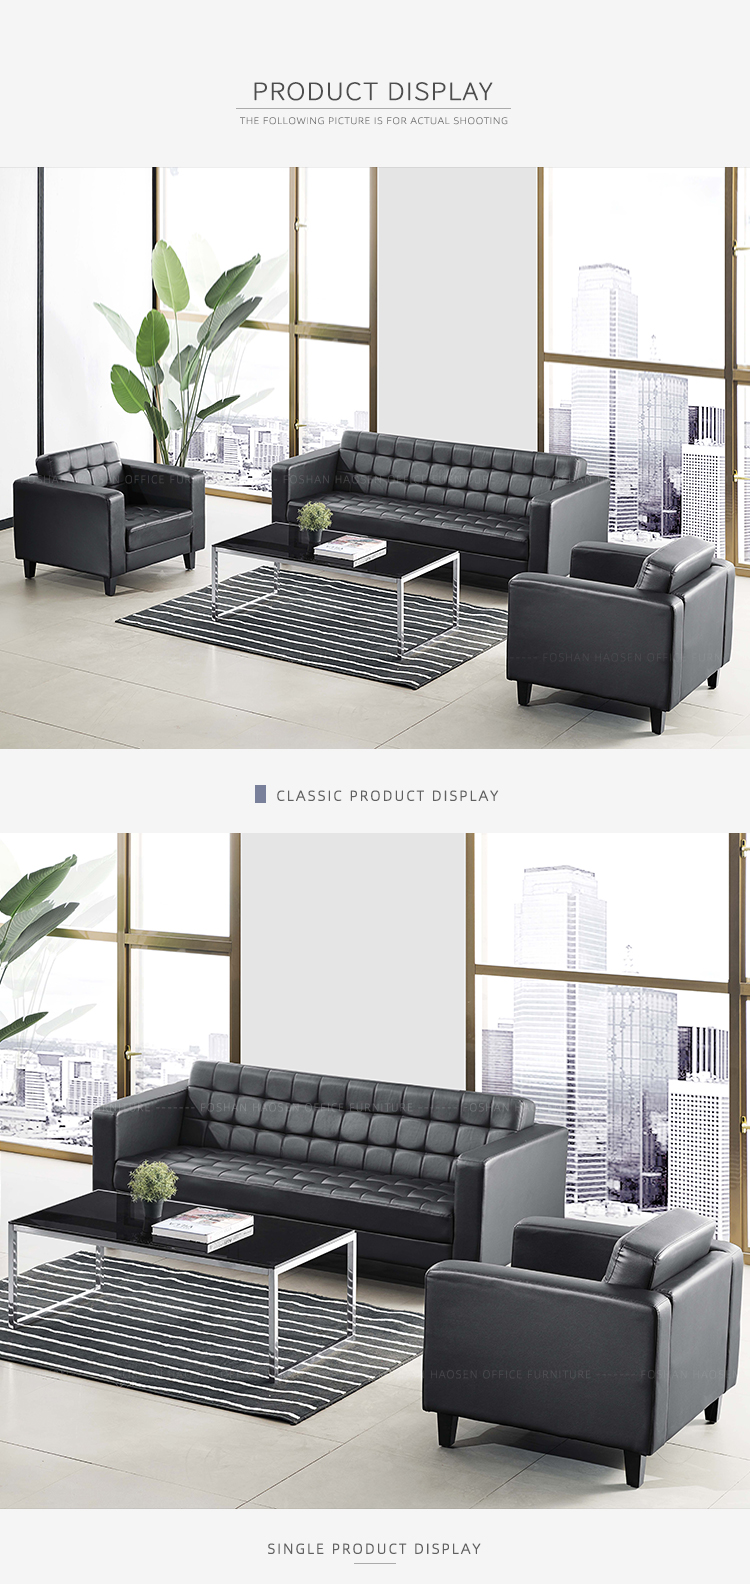 Simple style office pu sofa set living room furniture sofa Black leather SF119 Wholesale